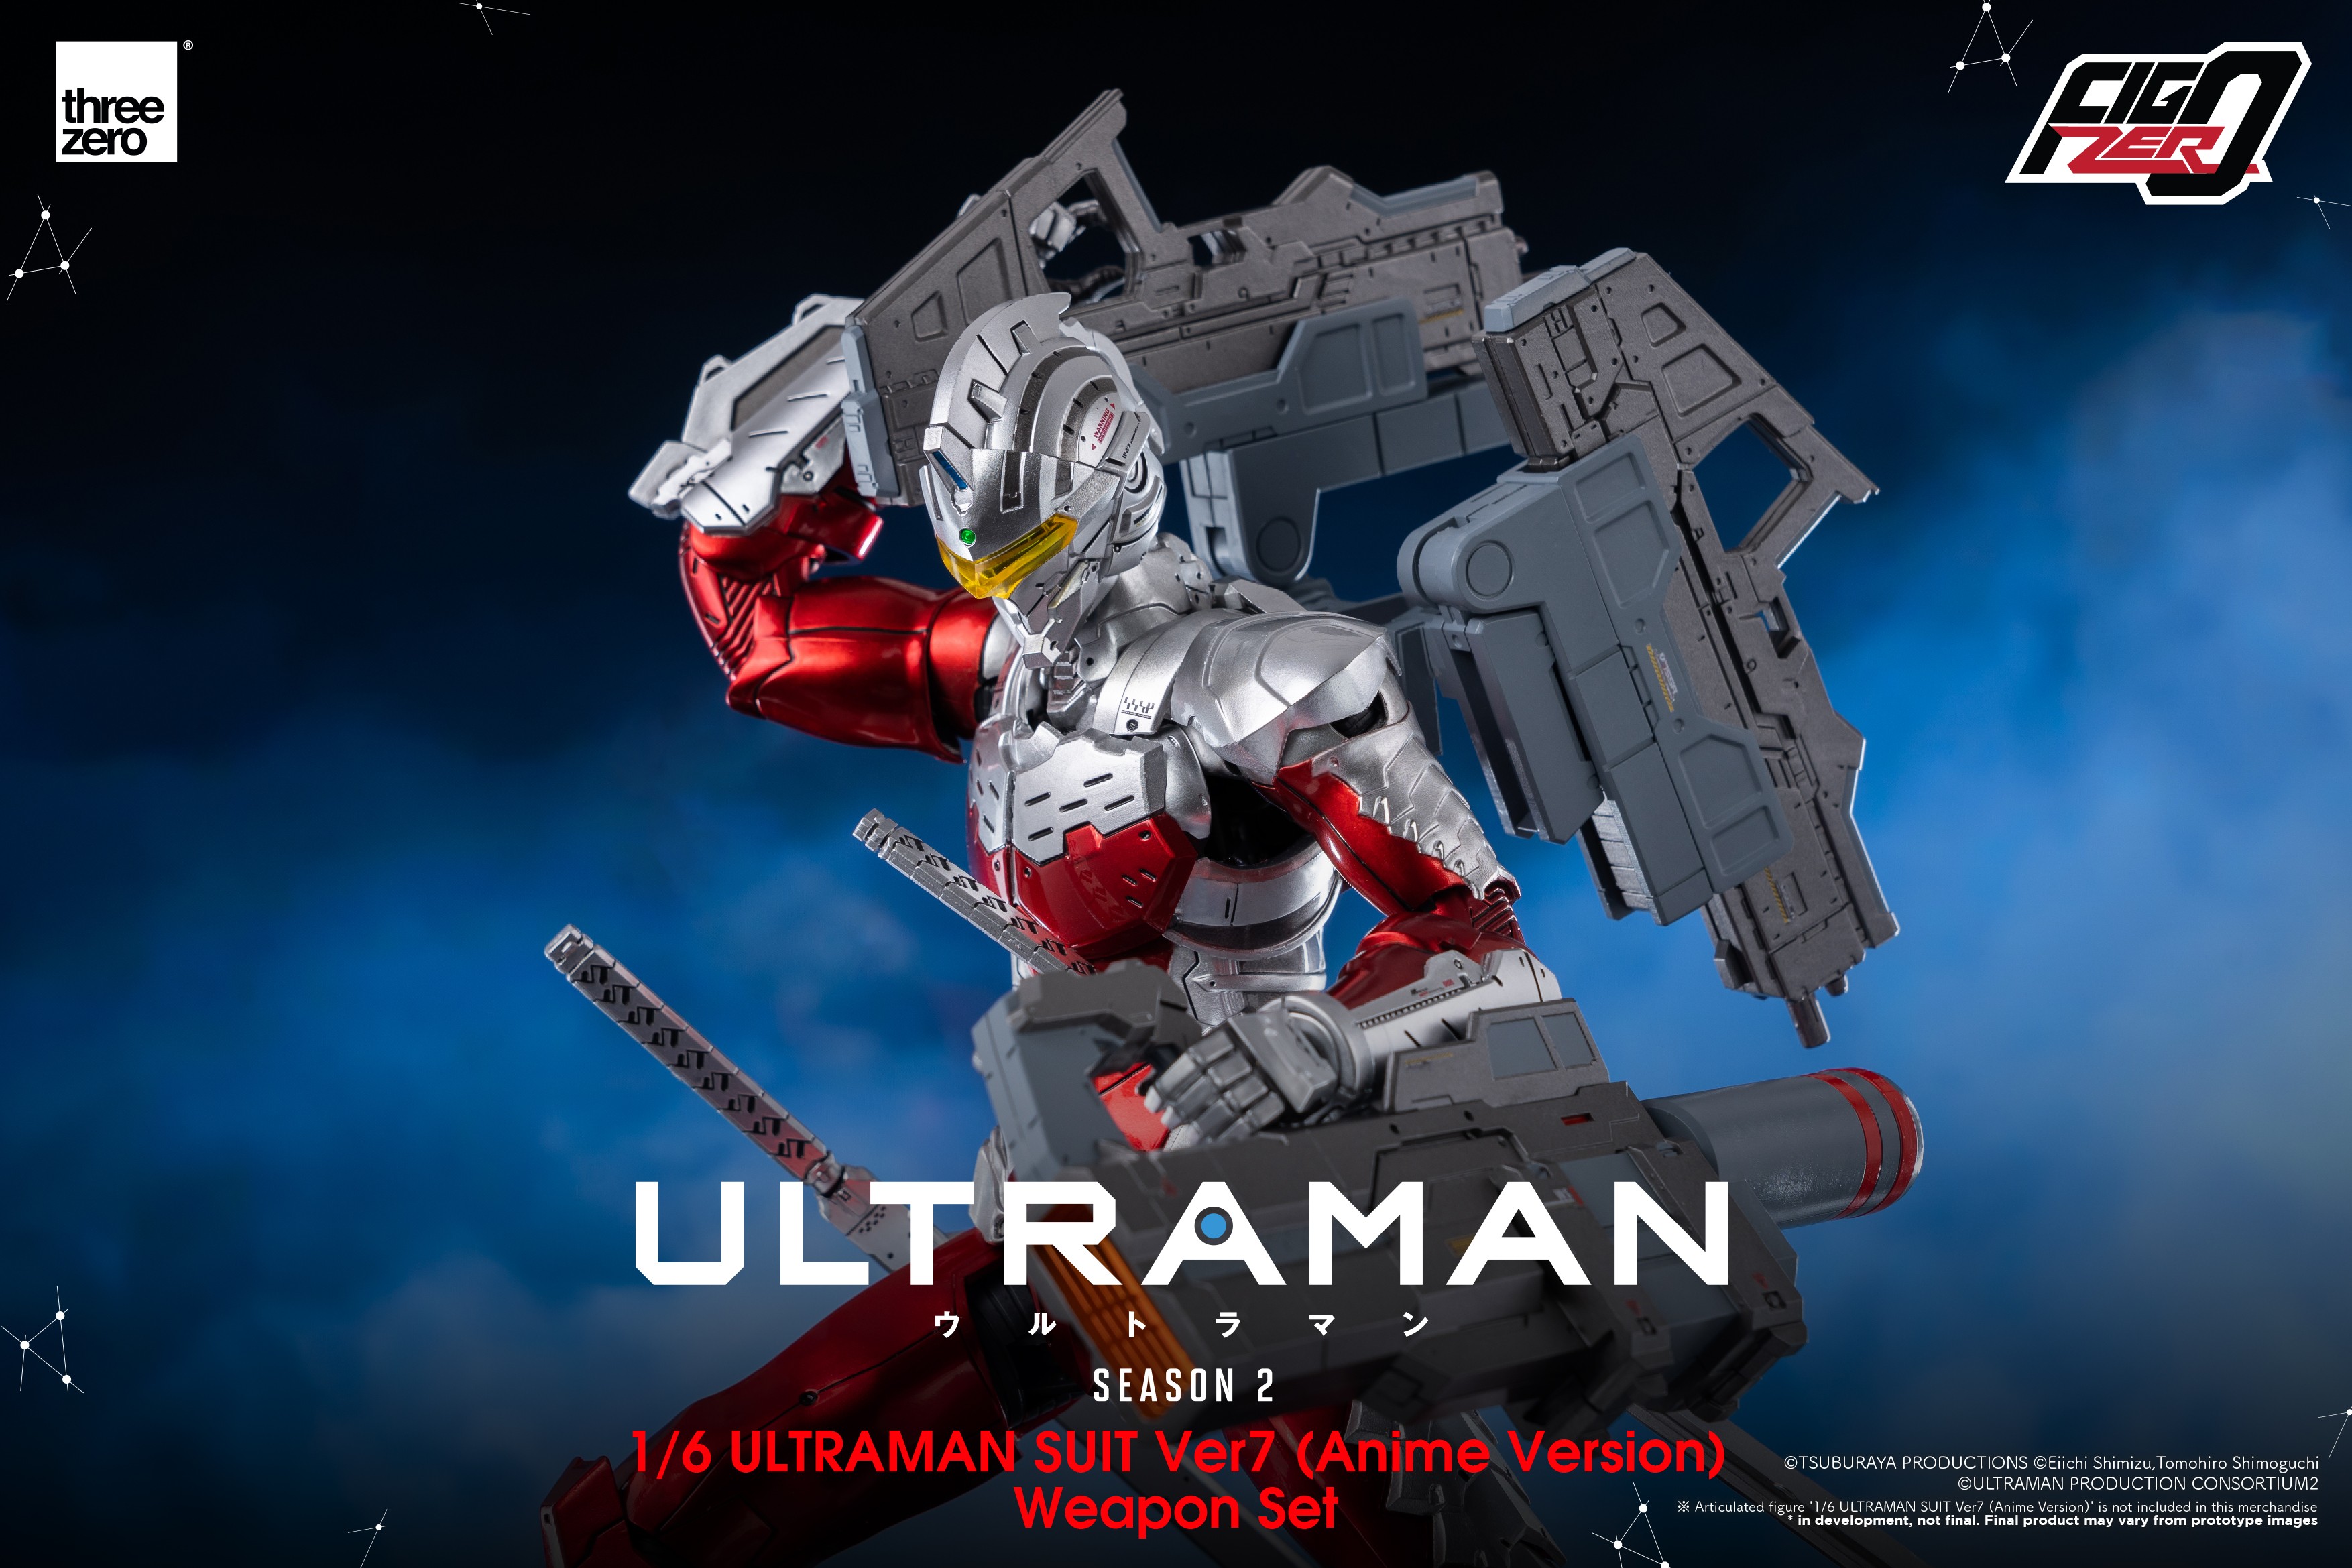 Ultraman Suit Ver7 (Anime Version) Weapon Set (Prototype Shown) View 7